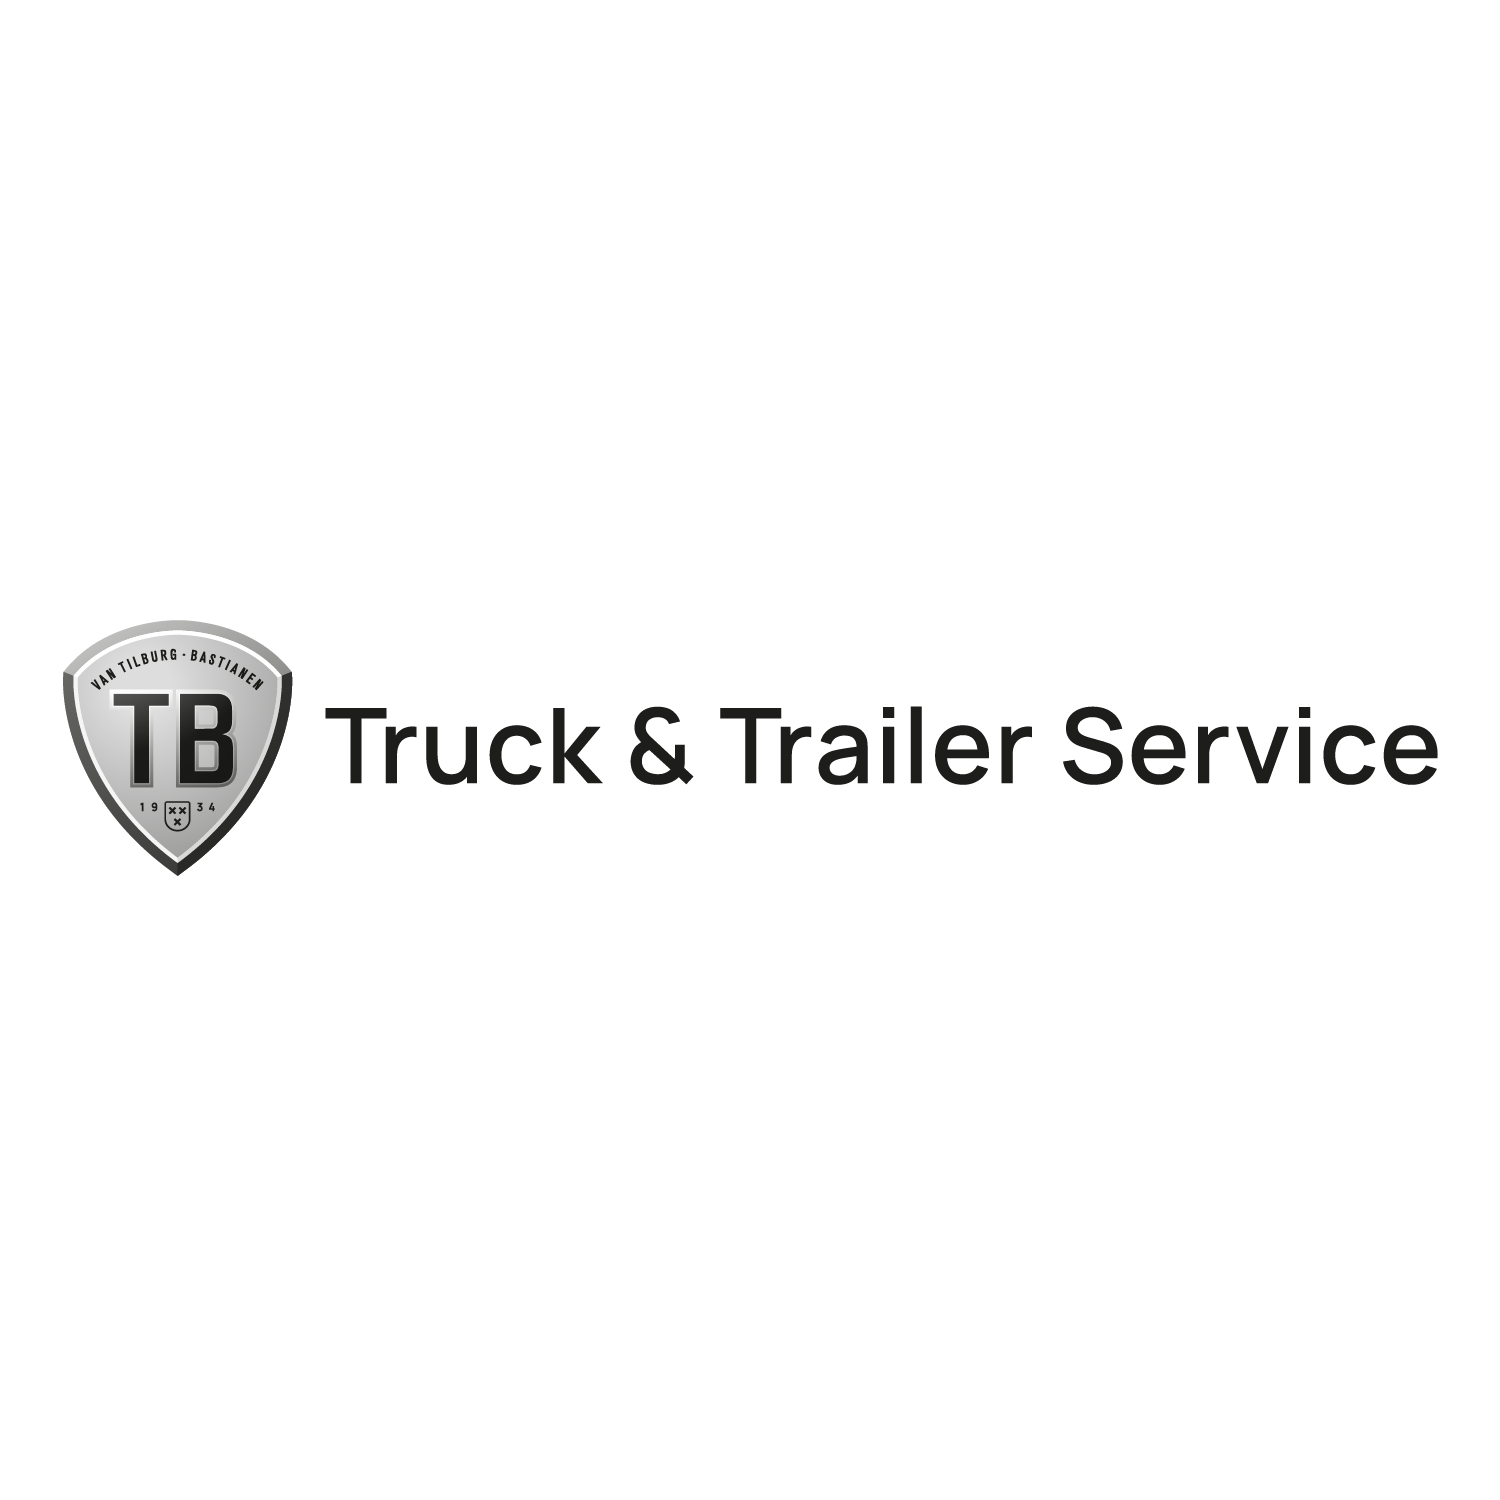 Tilburg Bastianen Truck & Trailer Services TB T&TS